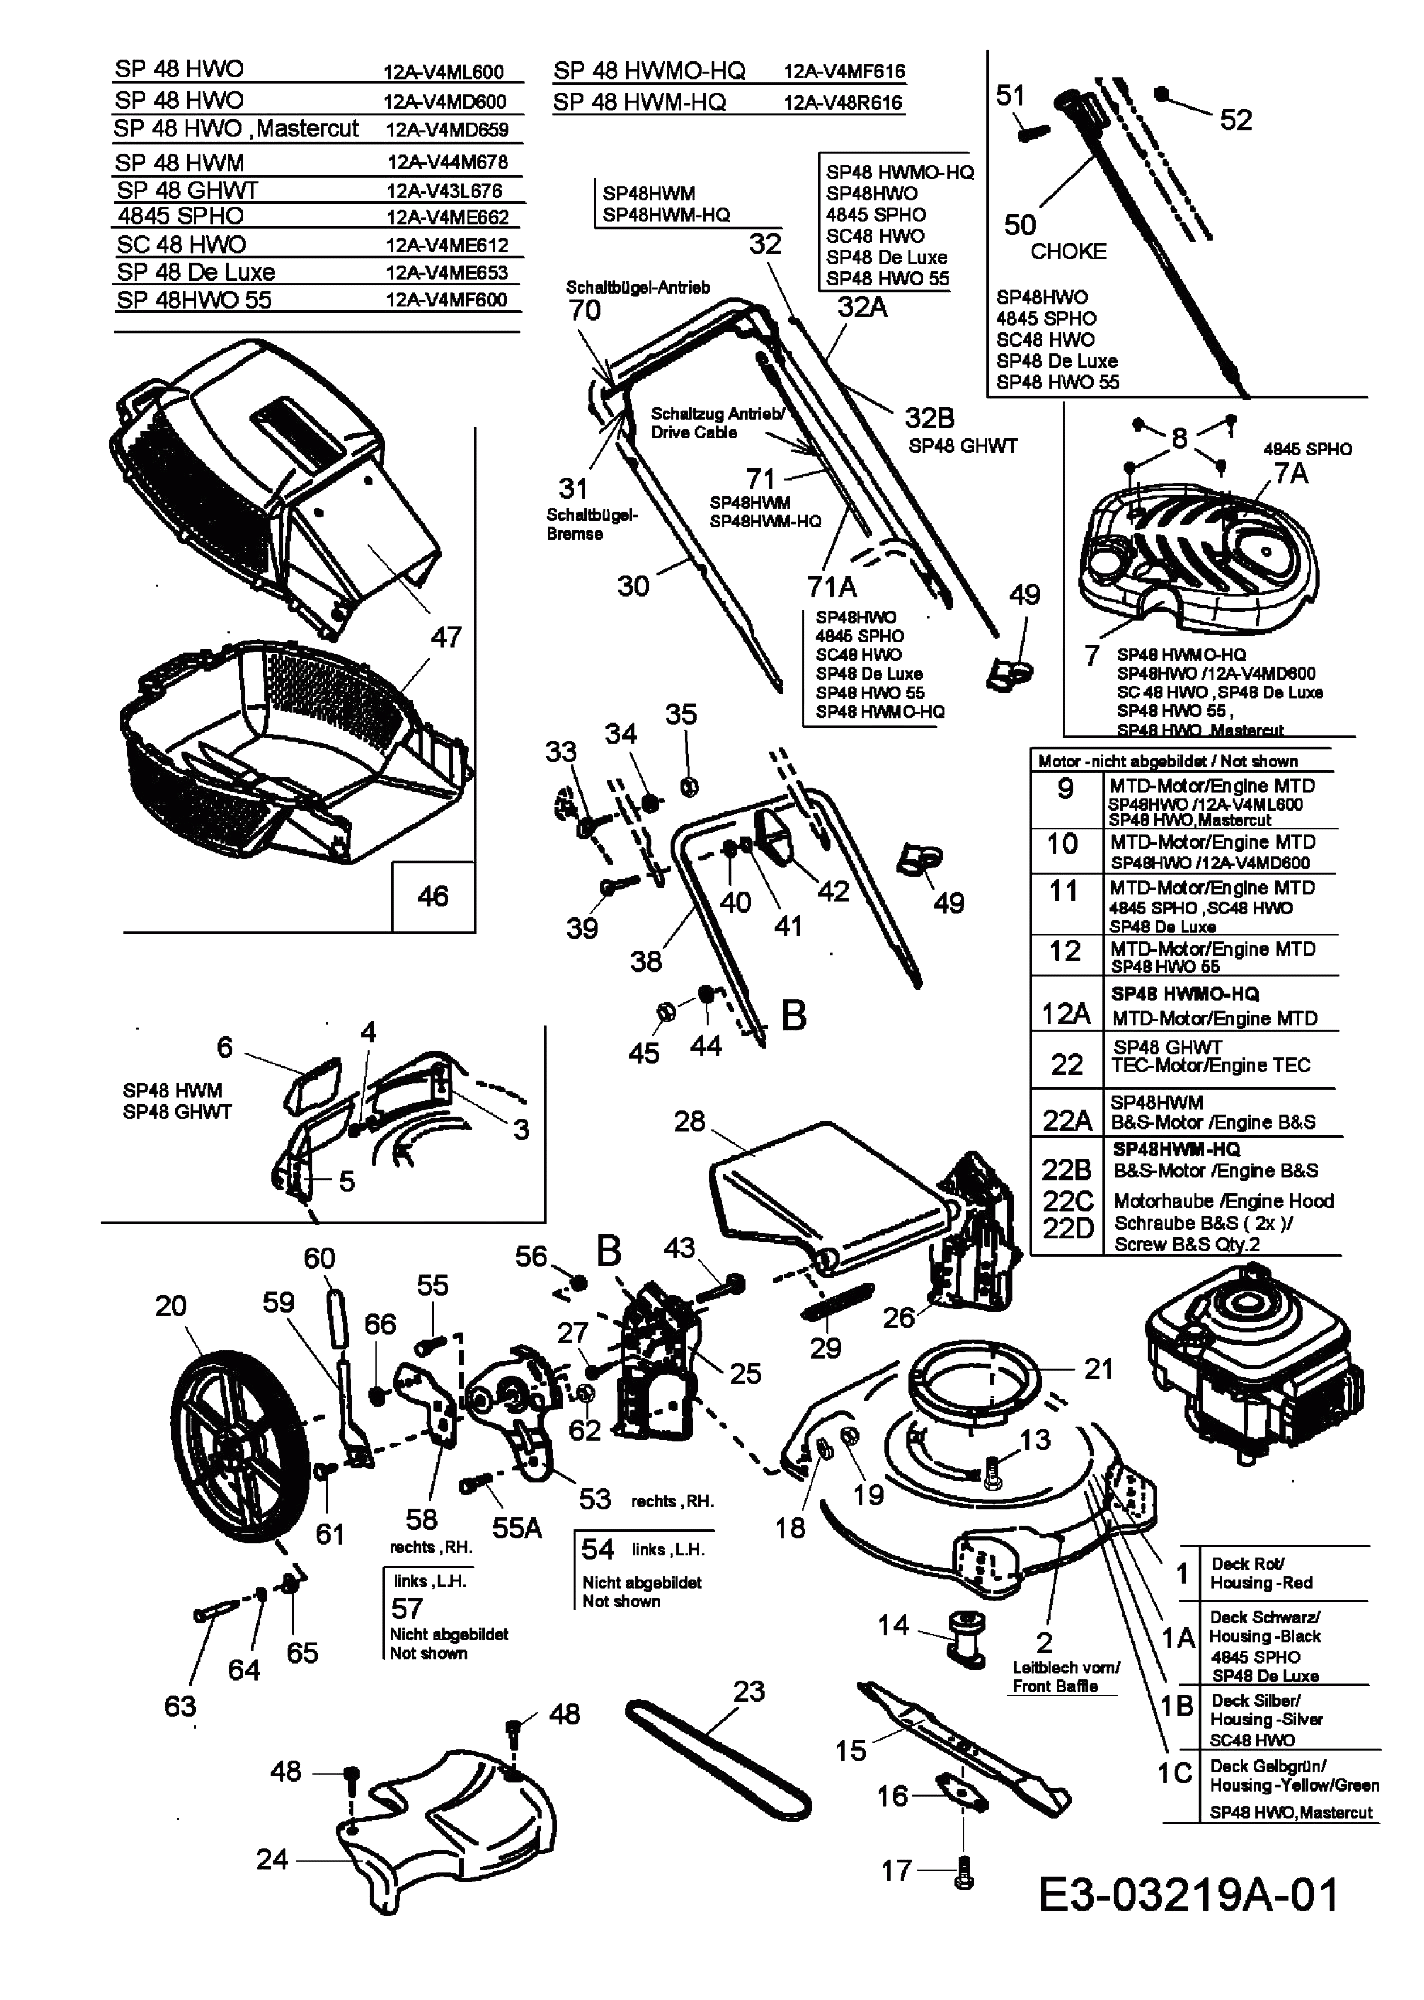 MTD Артикул 12A-V4ME653 (год выпуска 2008). Основная деталировка